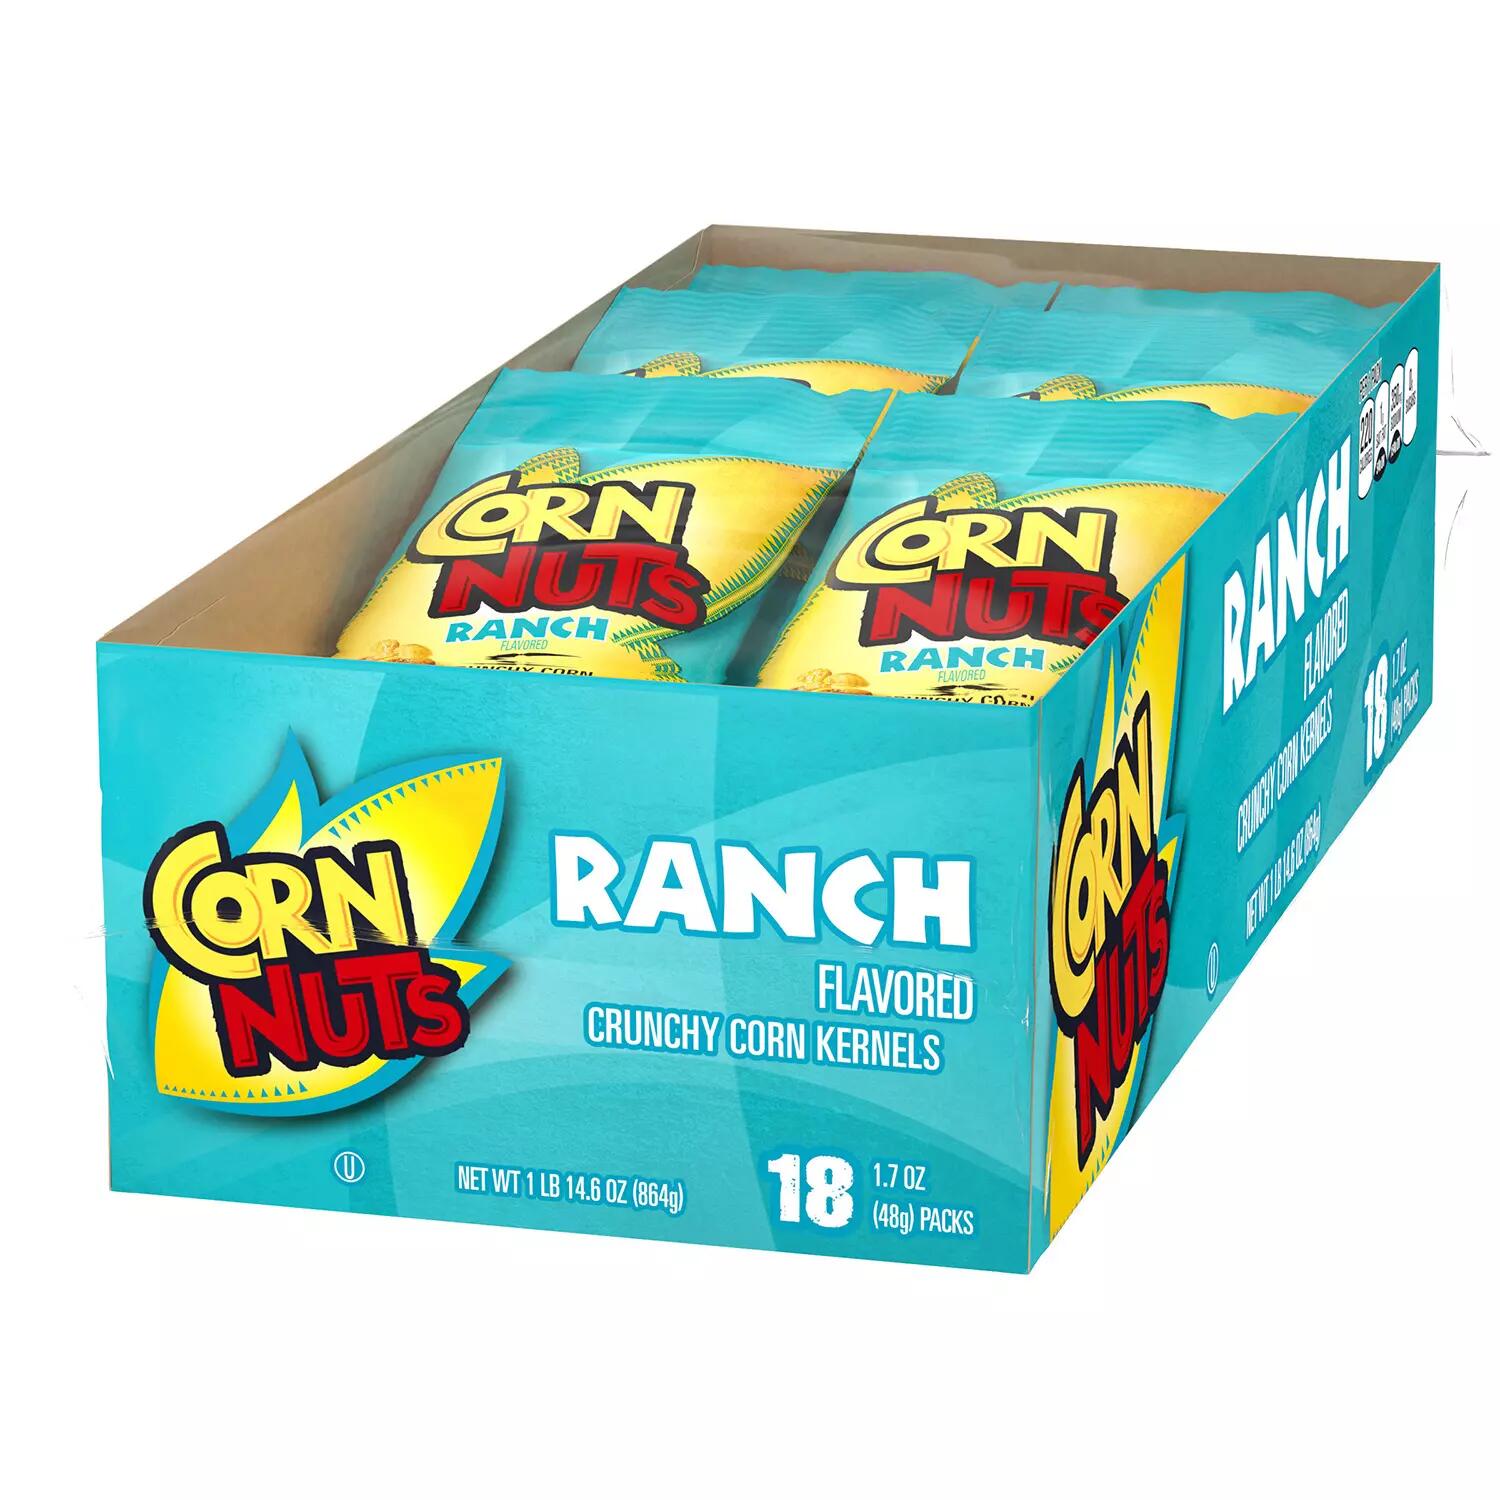 Download 2 Pack Corn Nuts Ranch Crunchy Corn Kernels (1.7 oz. Pouches, 18 ct.) | eBay